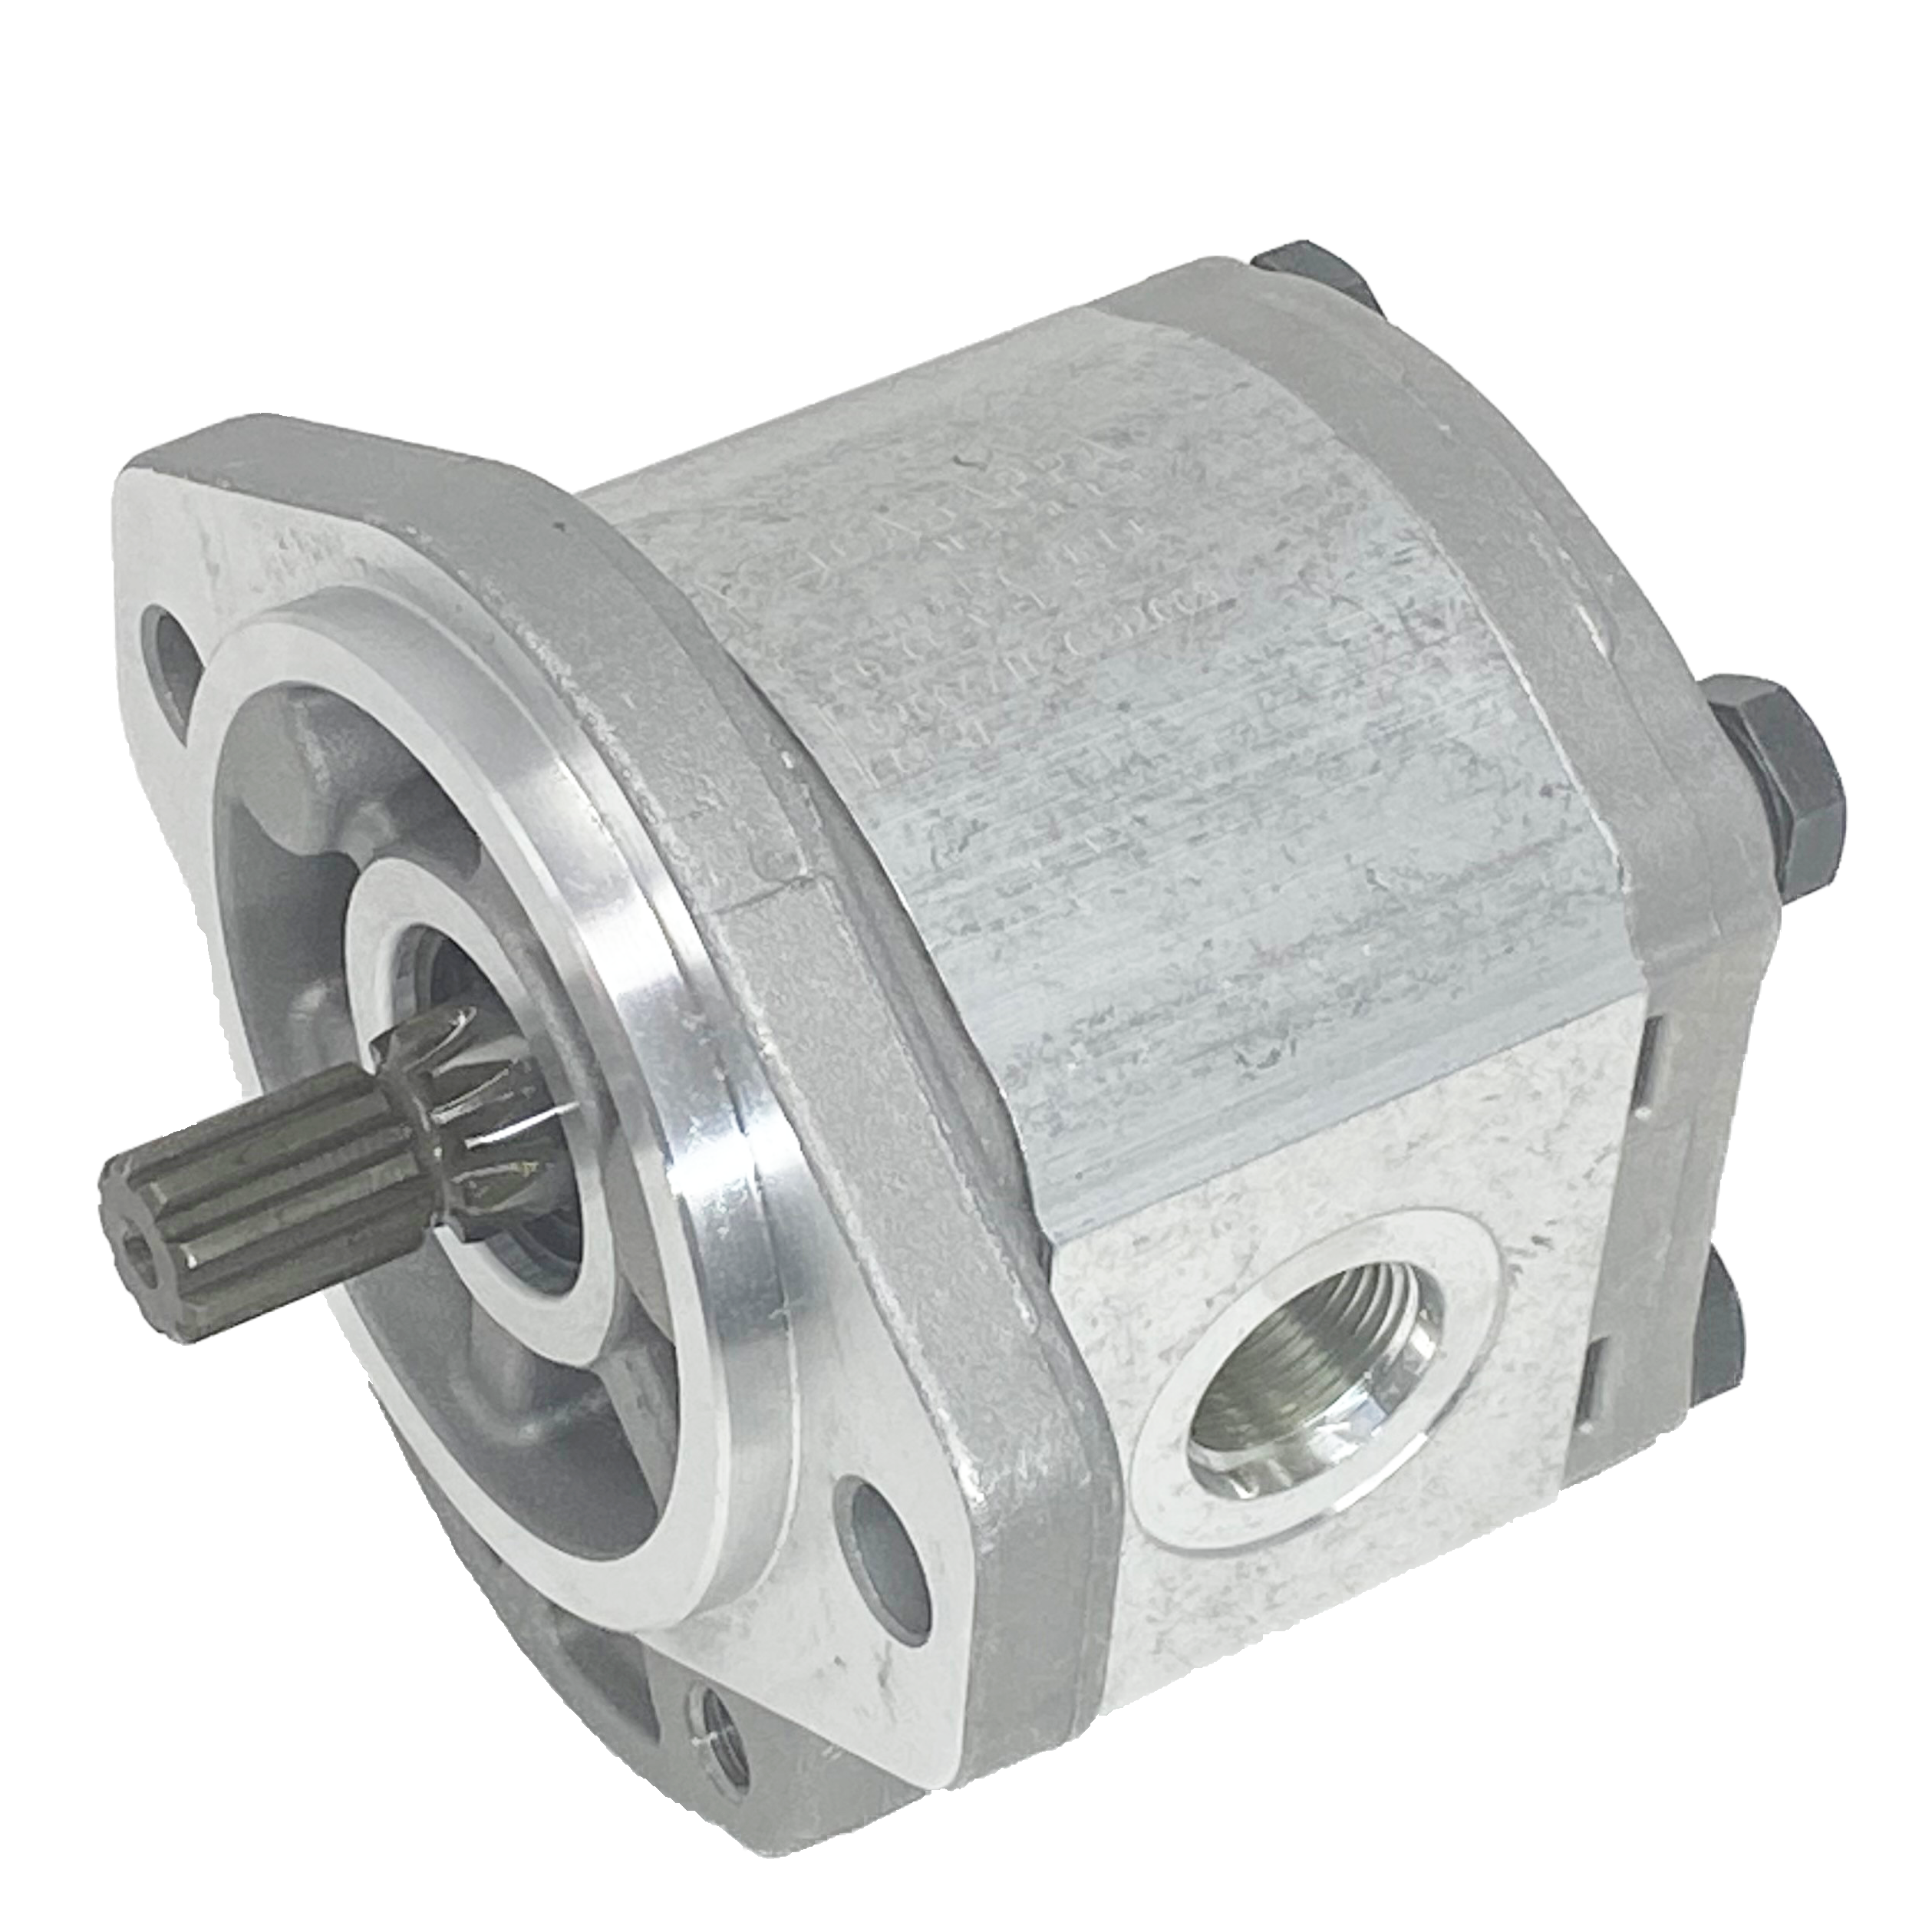 PLM20.14R0-03S1-LOC/OD-N-EL : Casappa Polaris Gear Motor, 14.53cc, 3625psi Rated, 3500RPM, Reversible Rear External Drain, 9T 16/32dp Shaft, SAE A 2-Bolt Flange, 0.625 (5/8") #10 SAE Inlet, 0.75 (3/4") #12 SAE Outlet, Aluminum Body & Flange